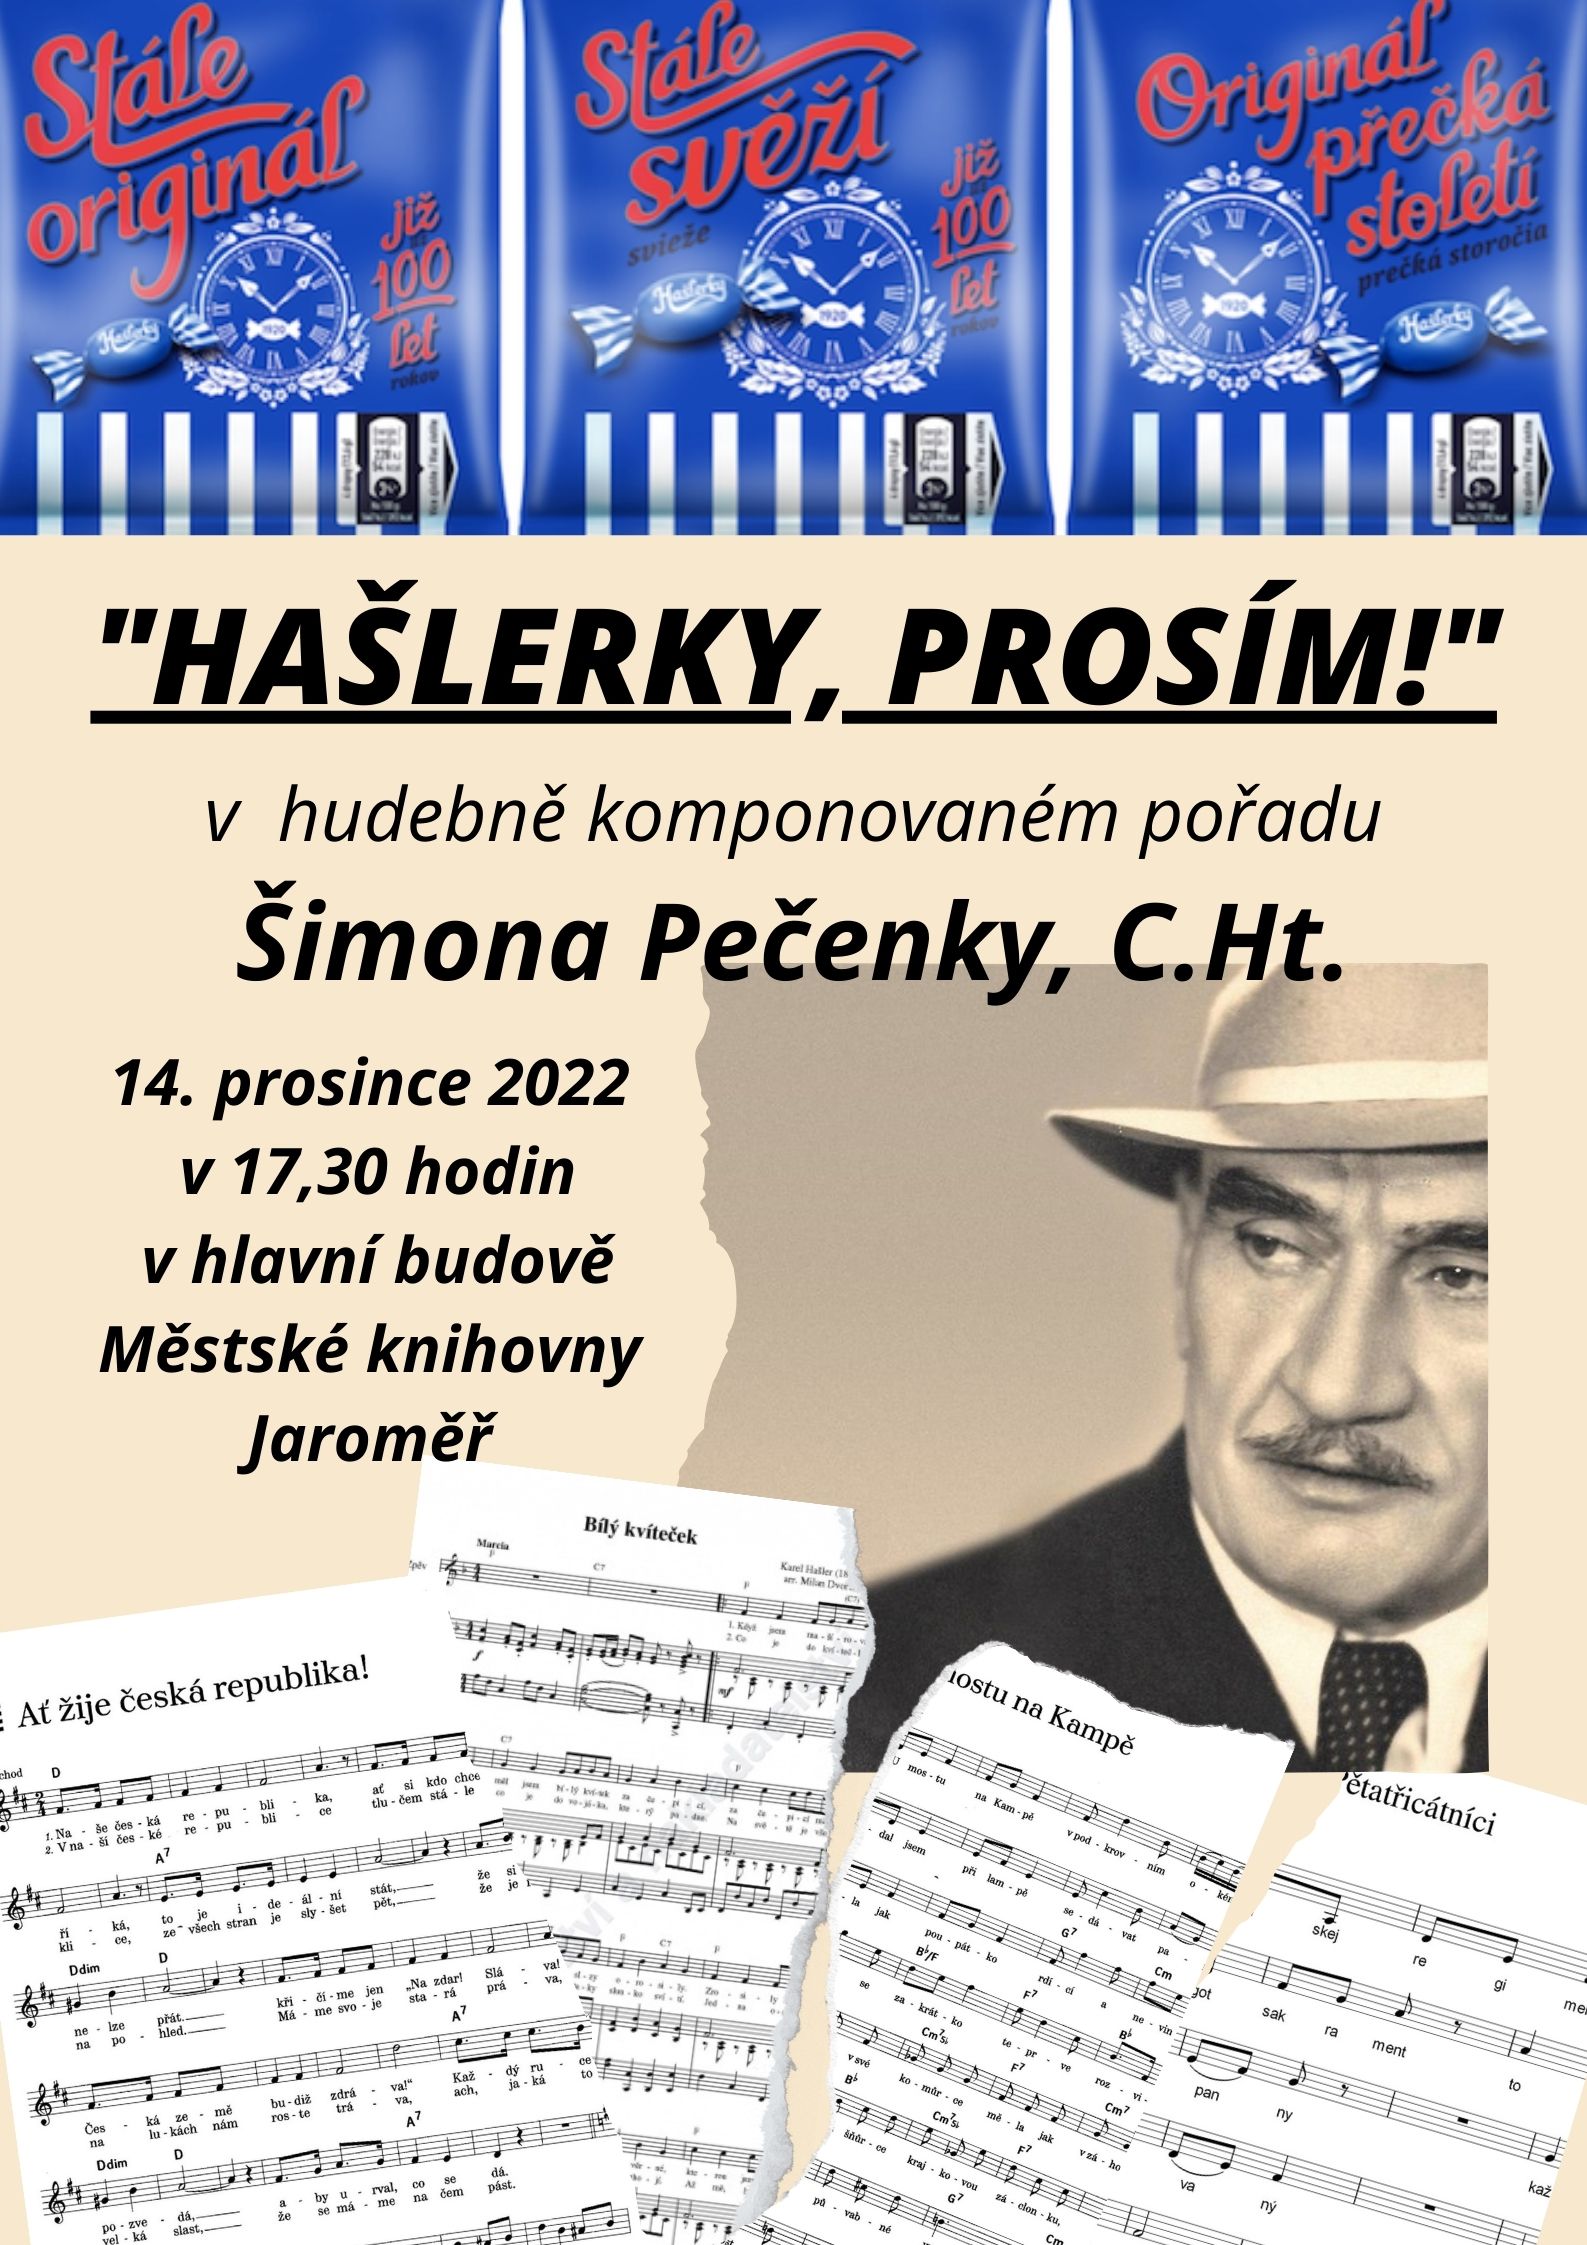 Šimon Pečenka, C.Ht.: „Hašlerky, prosím!“